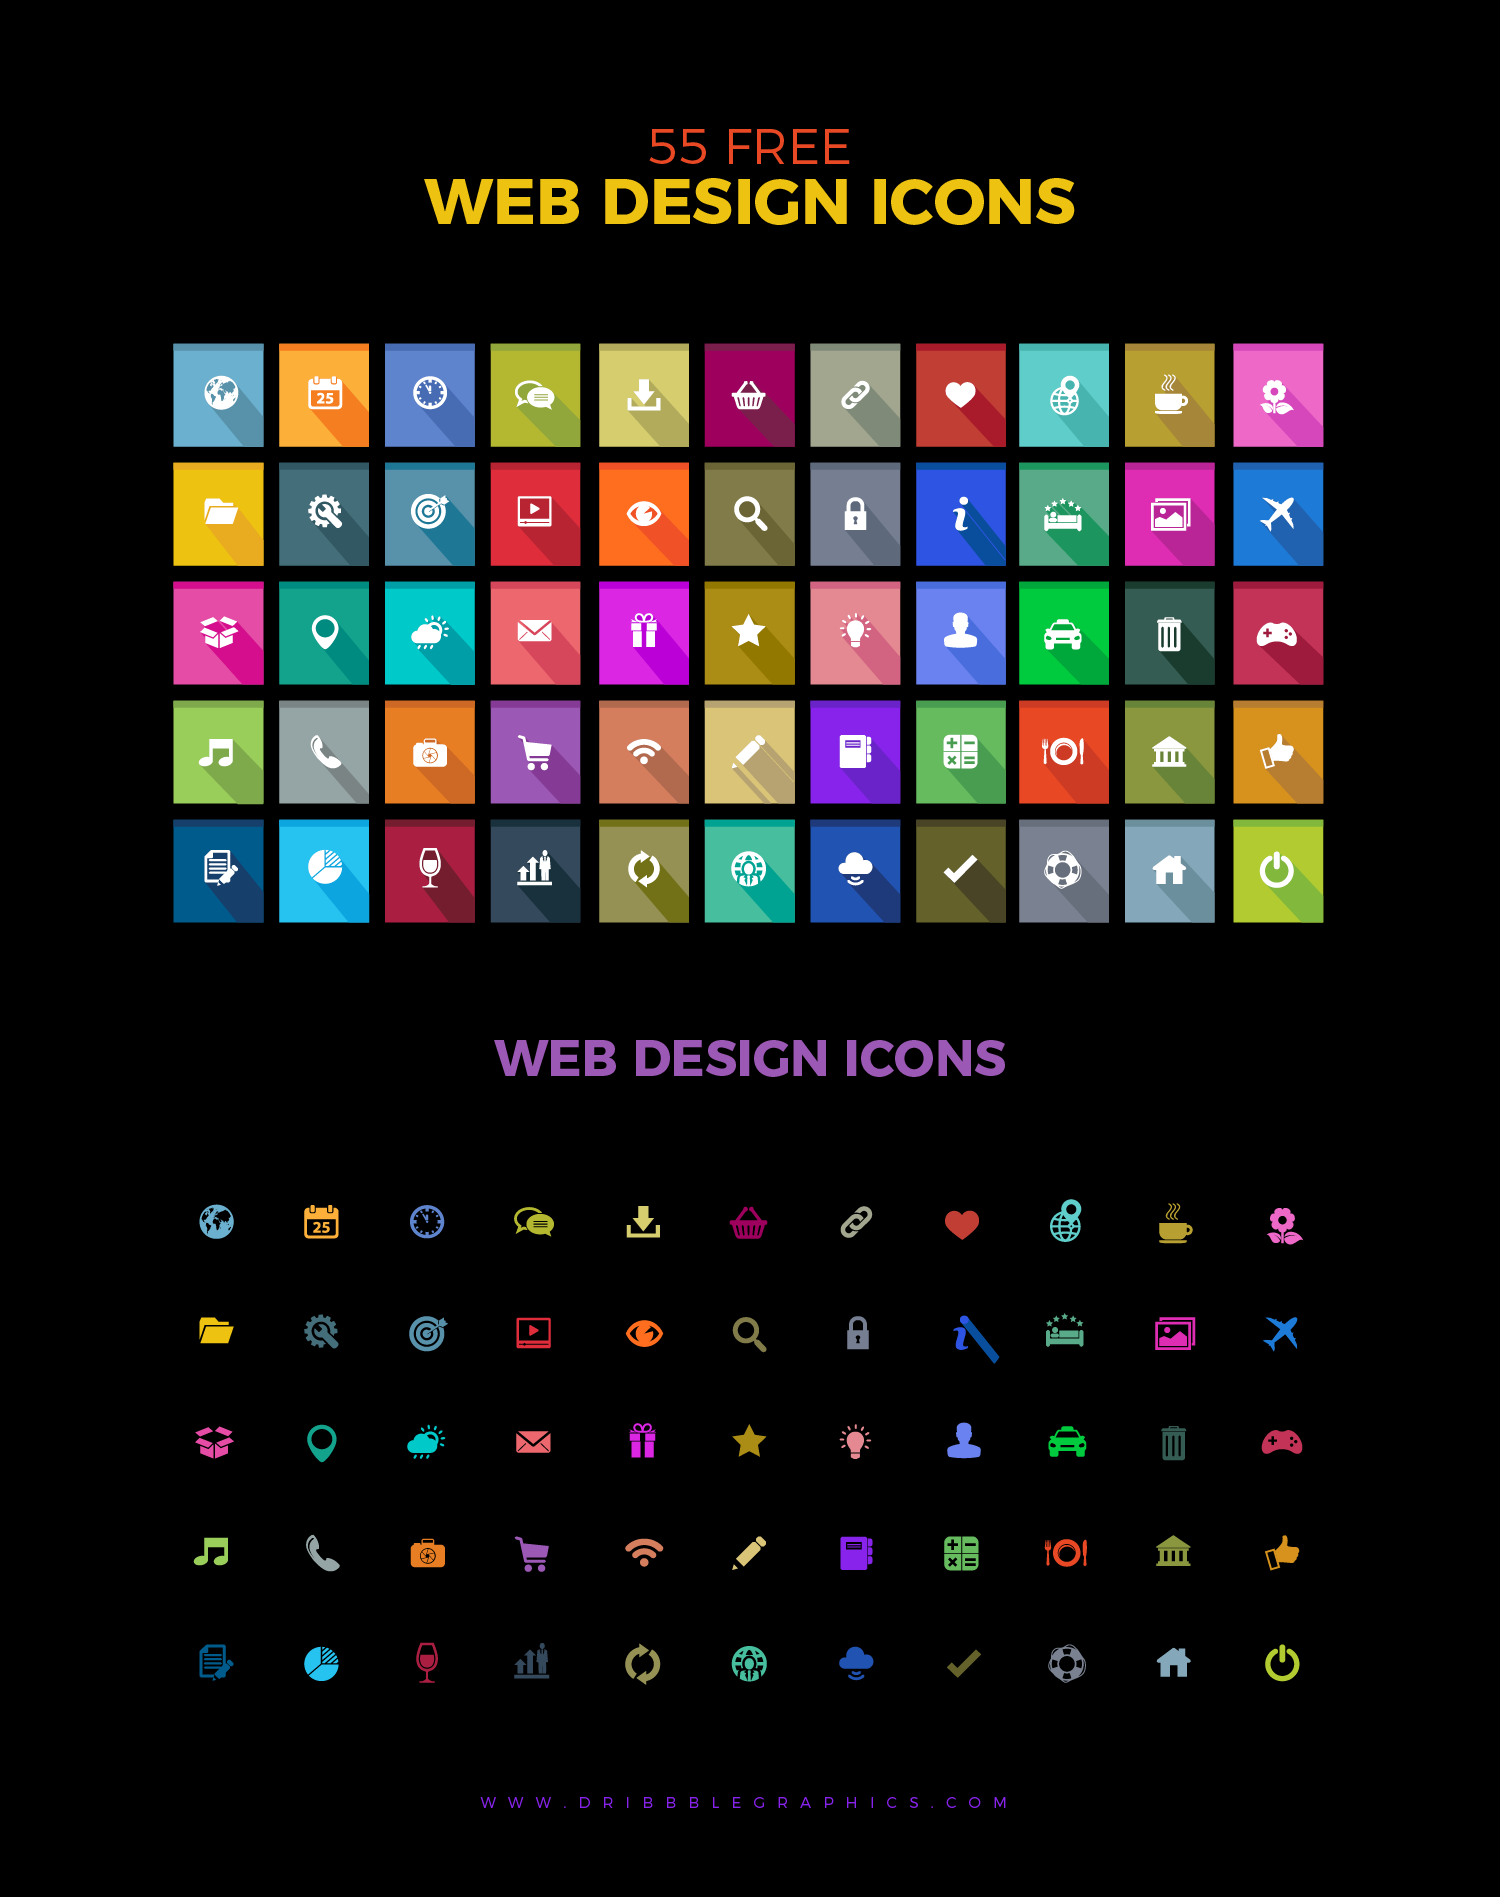 Free Web Design Icons